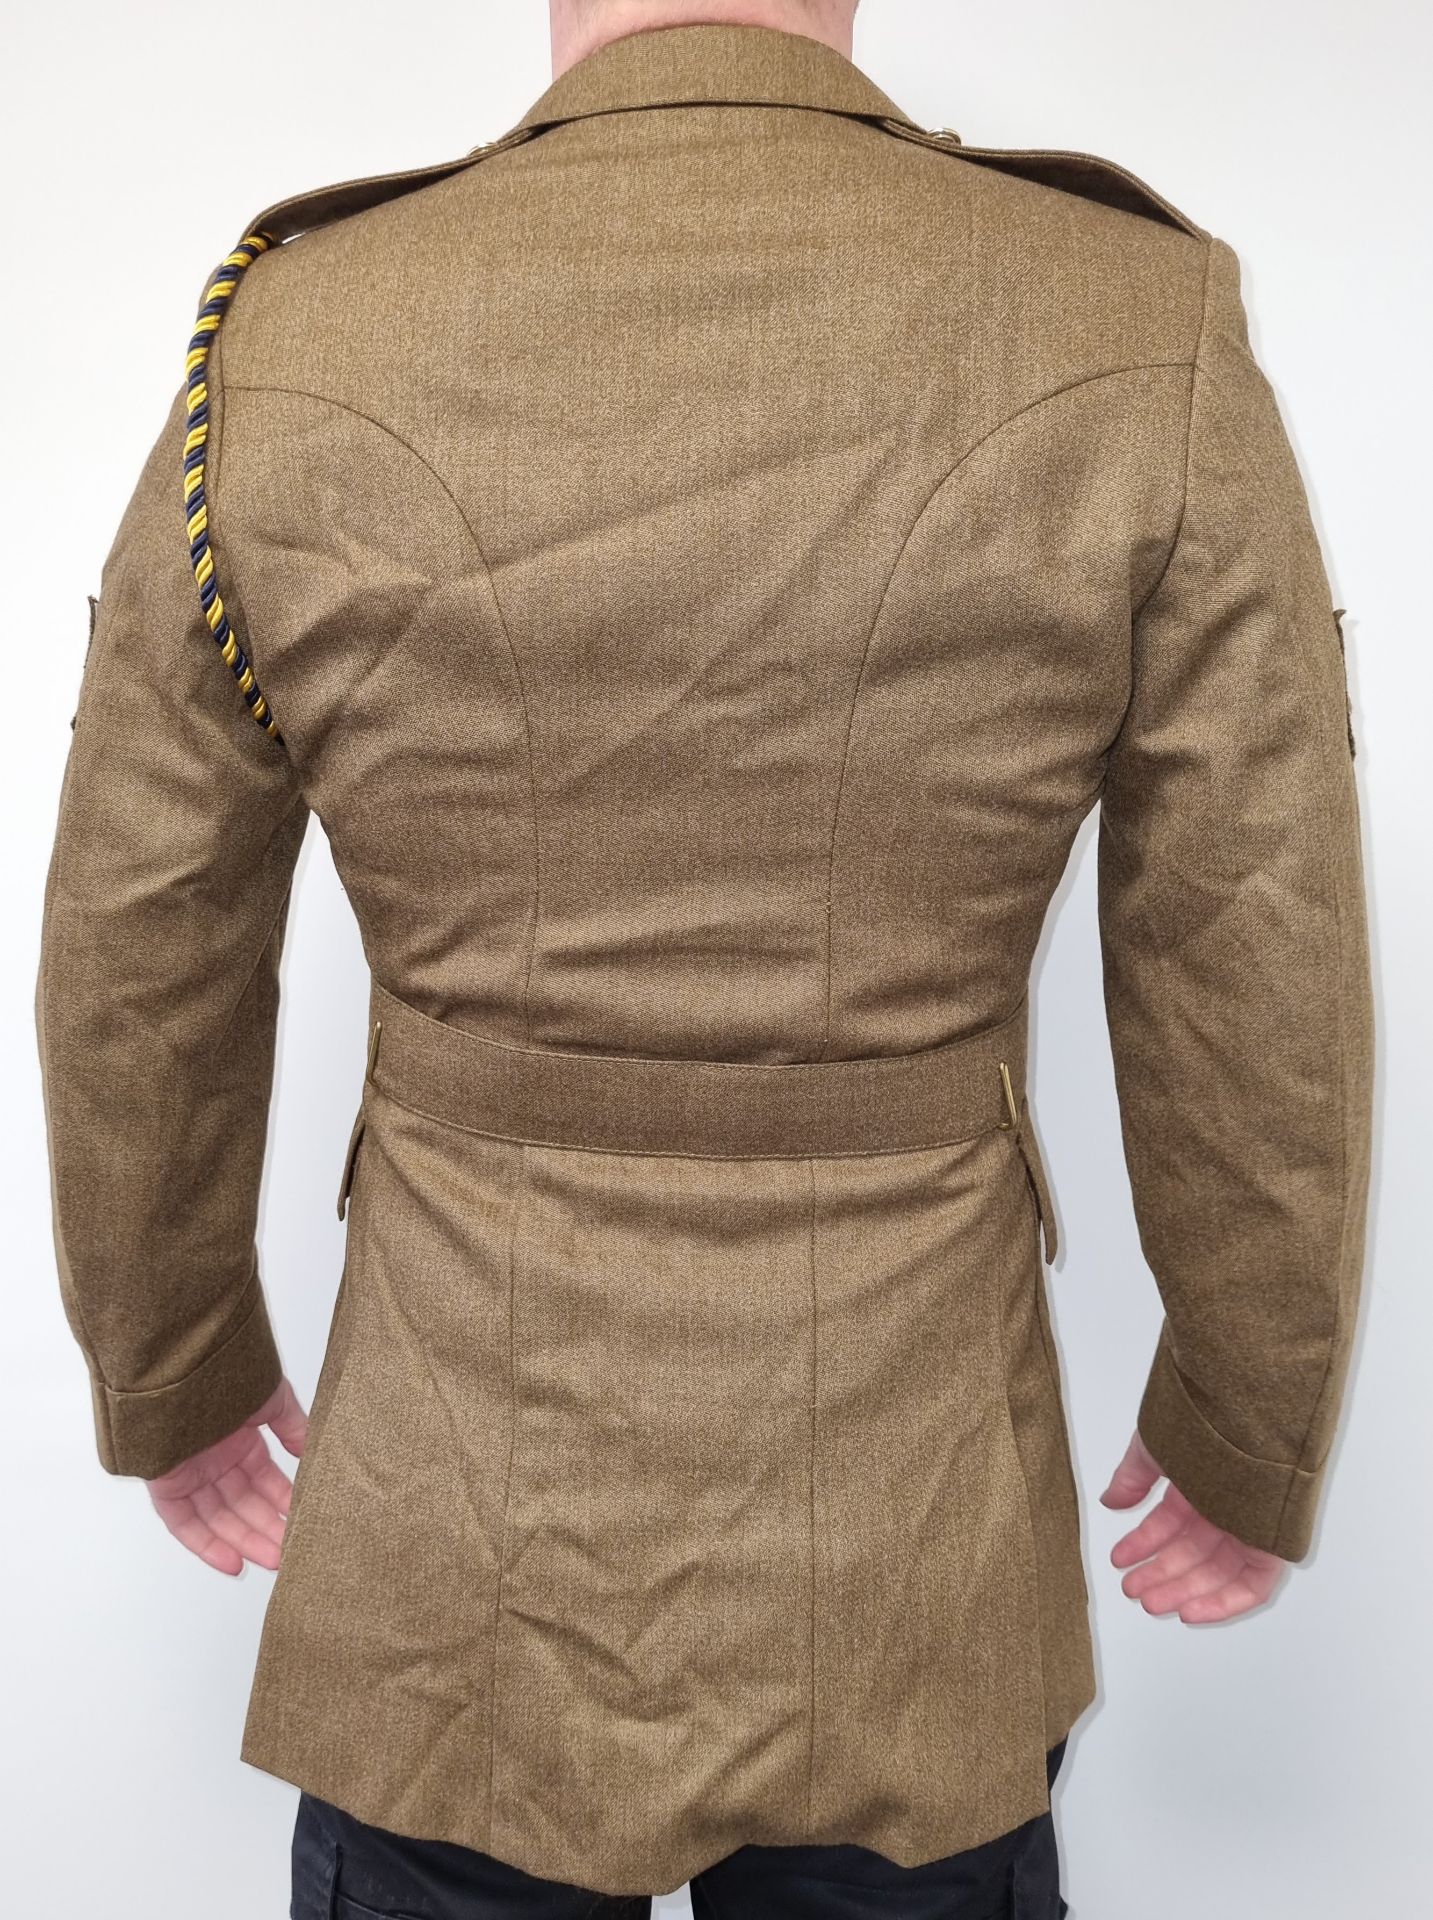 25x British Army No 2 dress jackets - mixed grades and sizes - Image 2 of 11